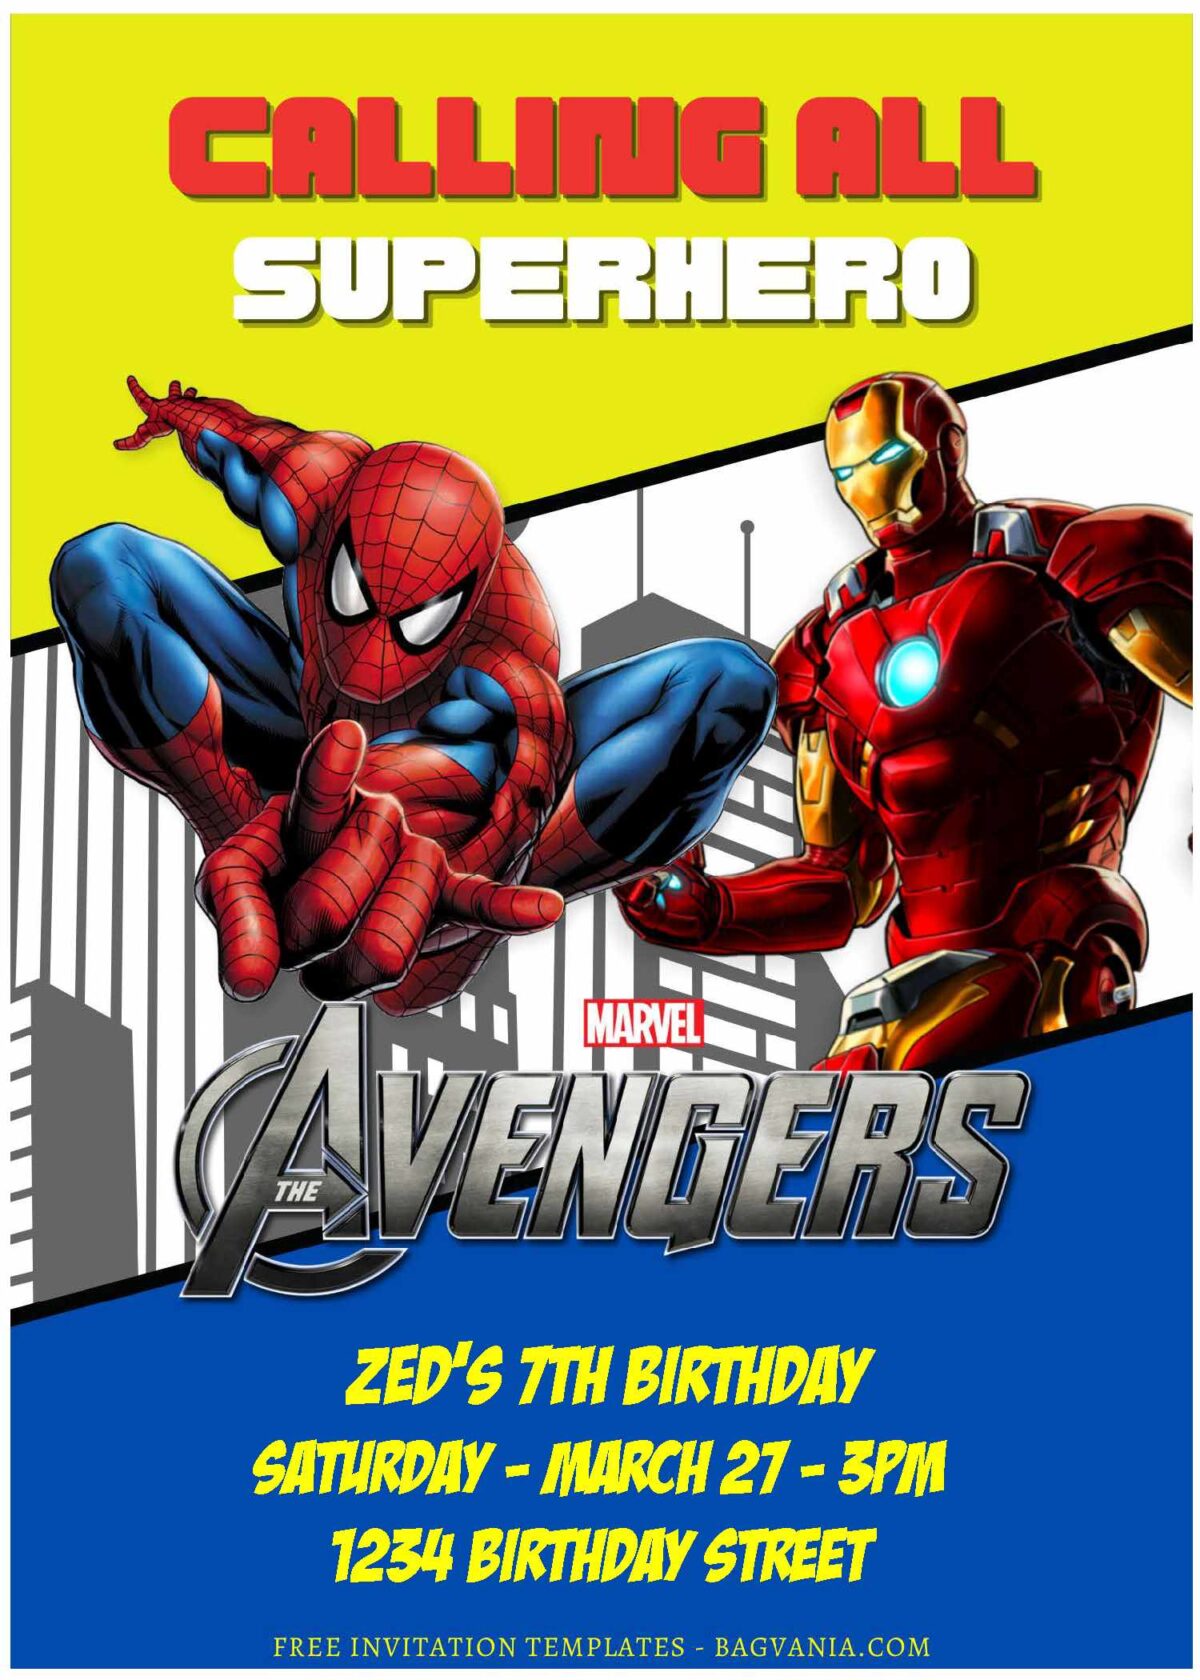 (Free Editable PDF) Marvel Universe Avengers Birthday Invitation Templates E